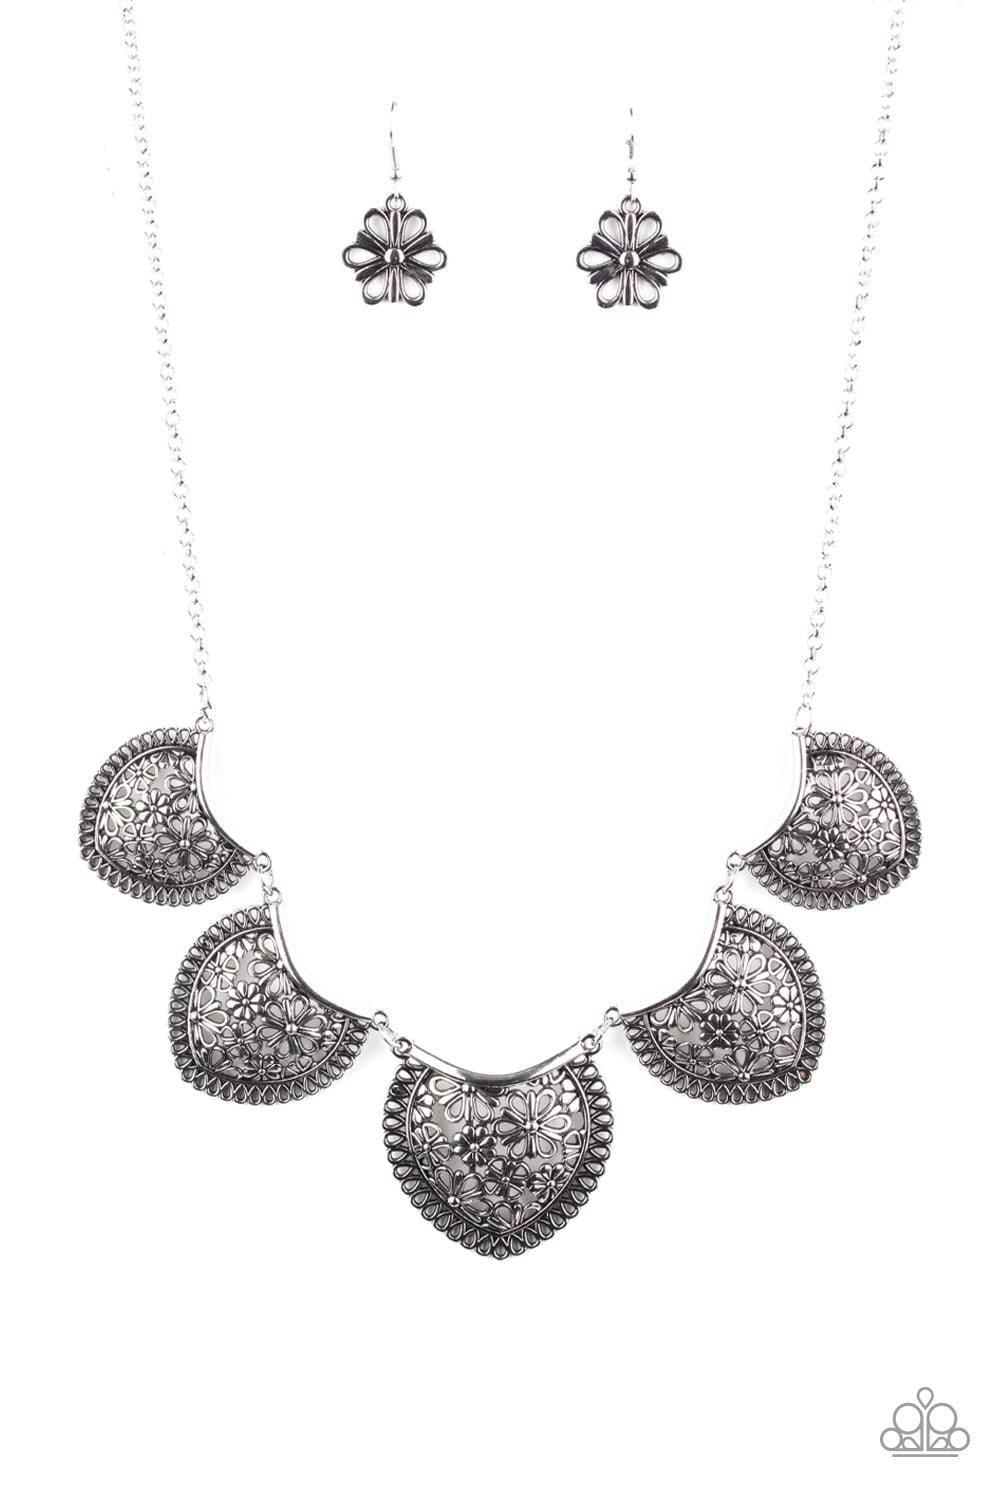 Paparazzi Accessories - Garden Pixie - Silver Necklace - Bling by JessieK